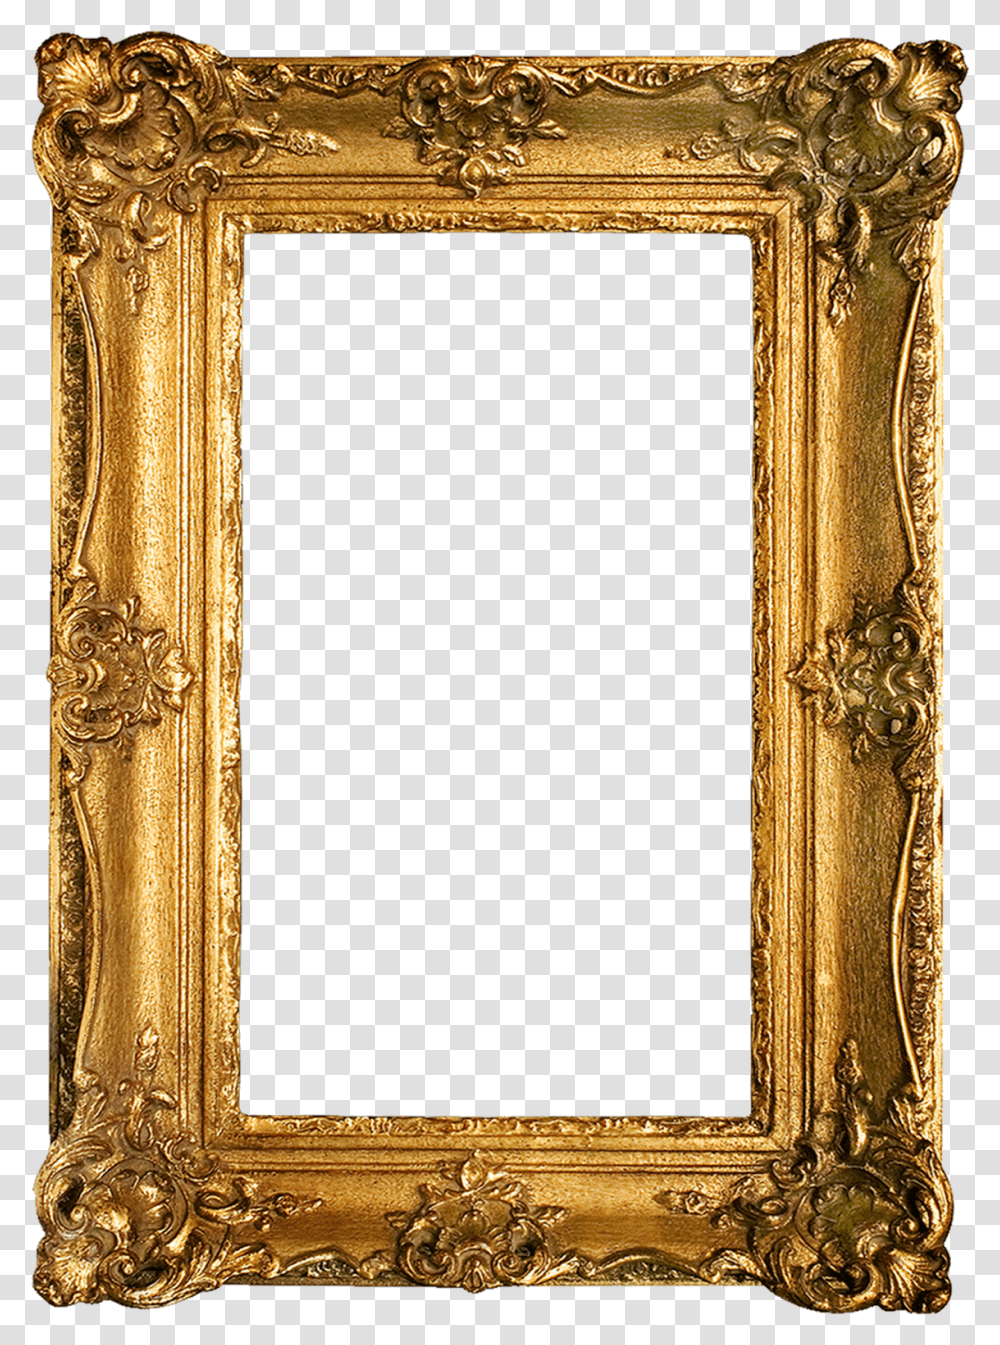 Antique Picture Frames Hd Pictures Vhvrs Vintage Gold Picture Frame, Mirror, Rug, Art, Gate Transparent Png